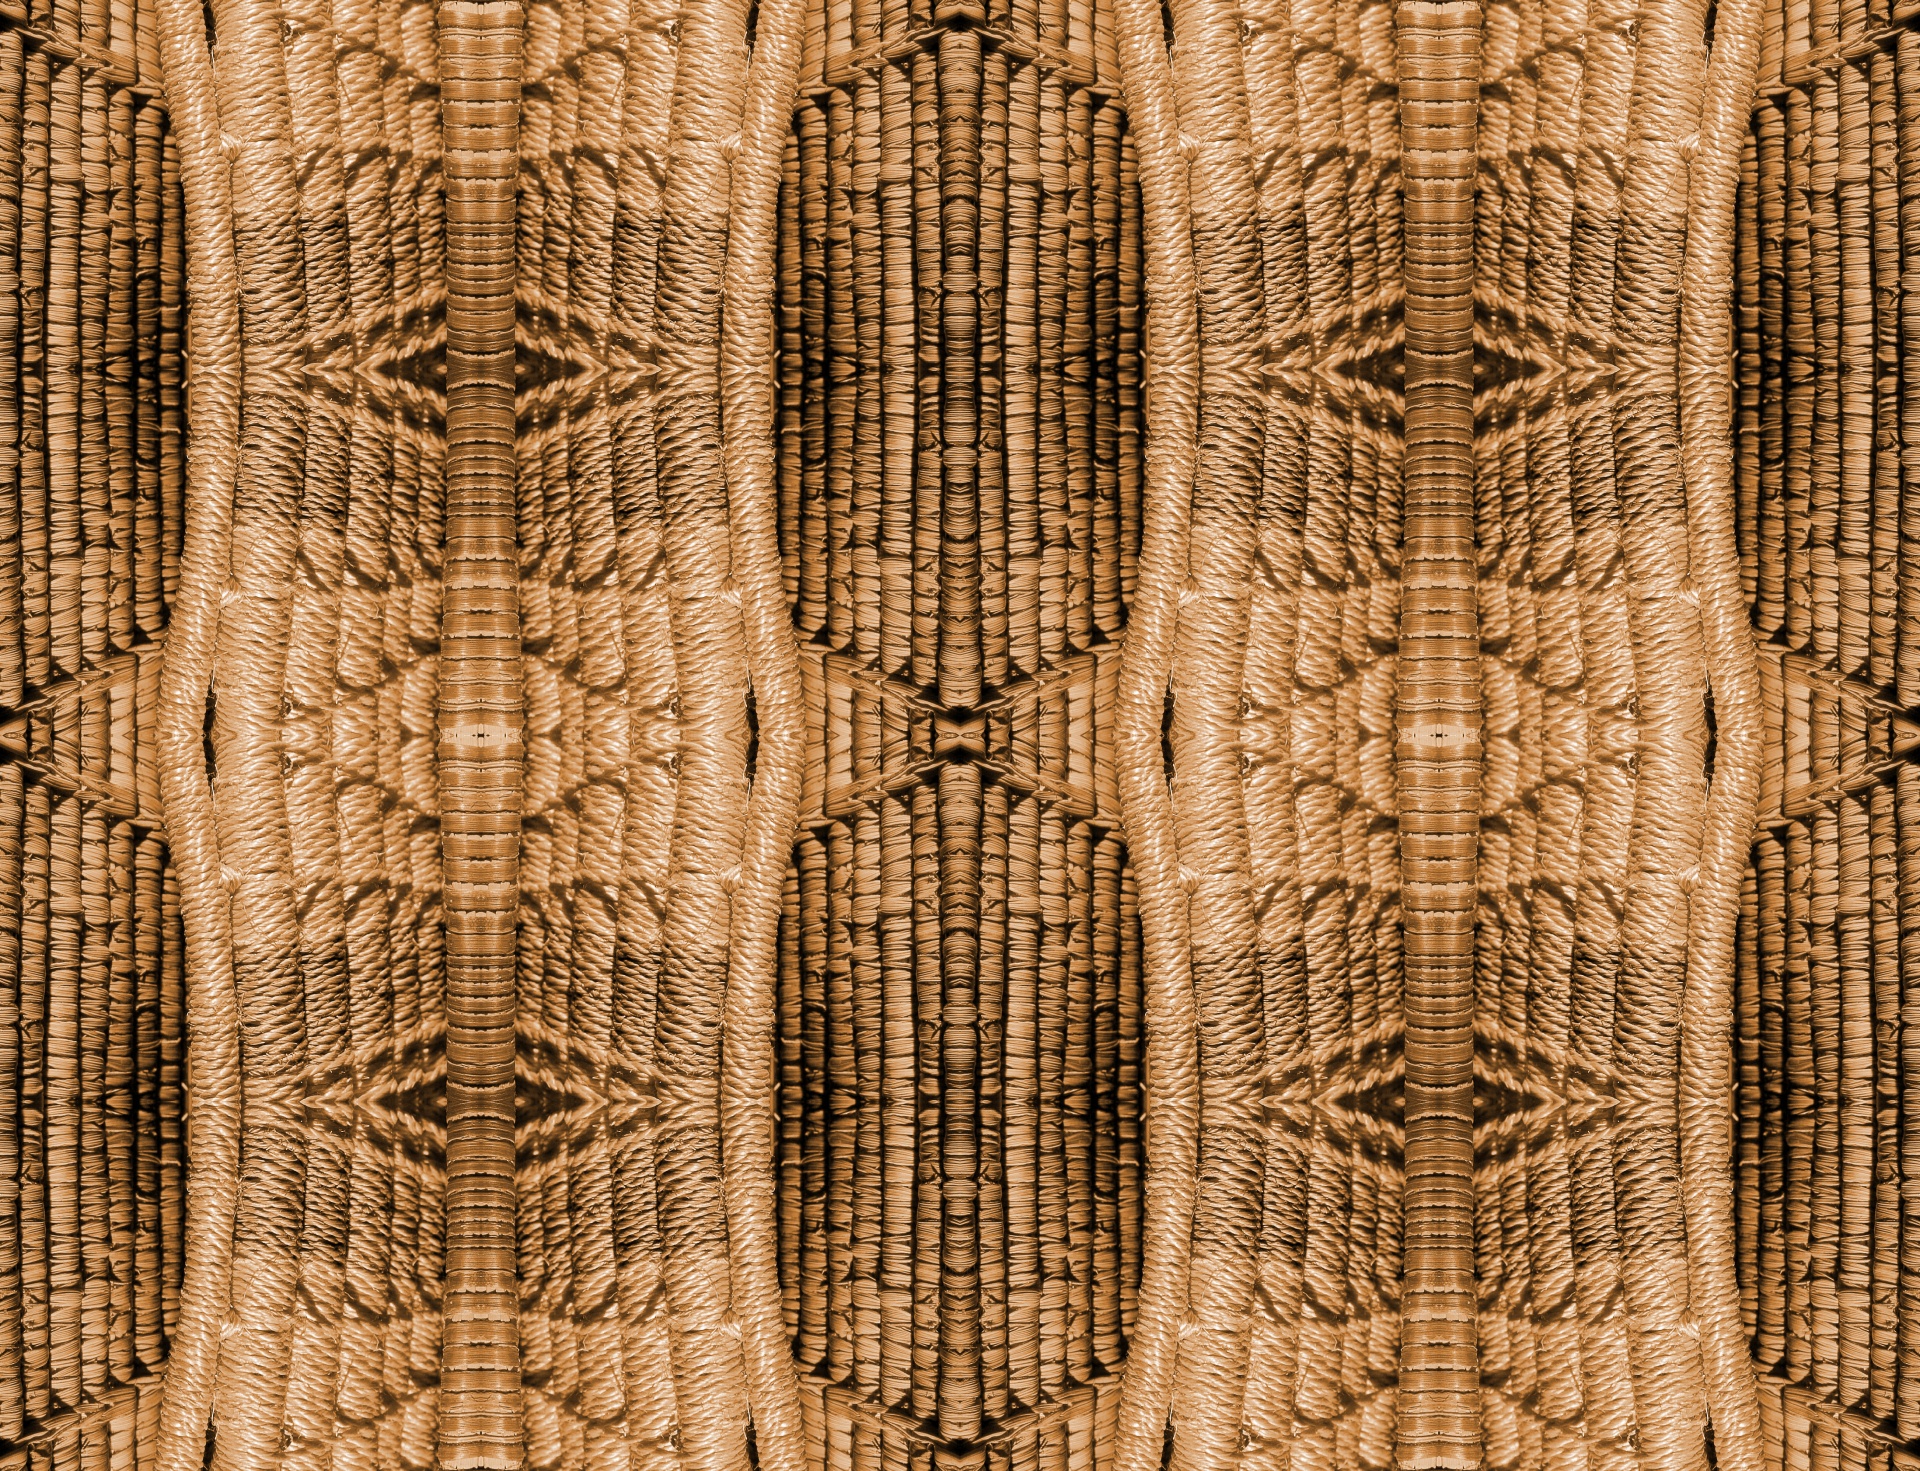 Sepia Basket Weave Pattern